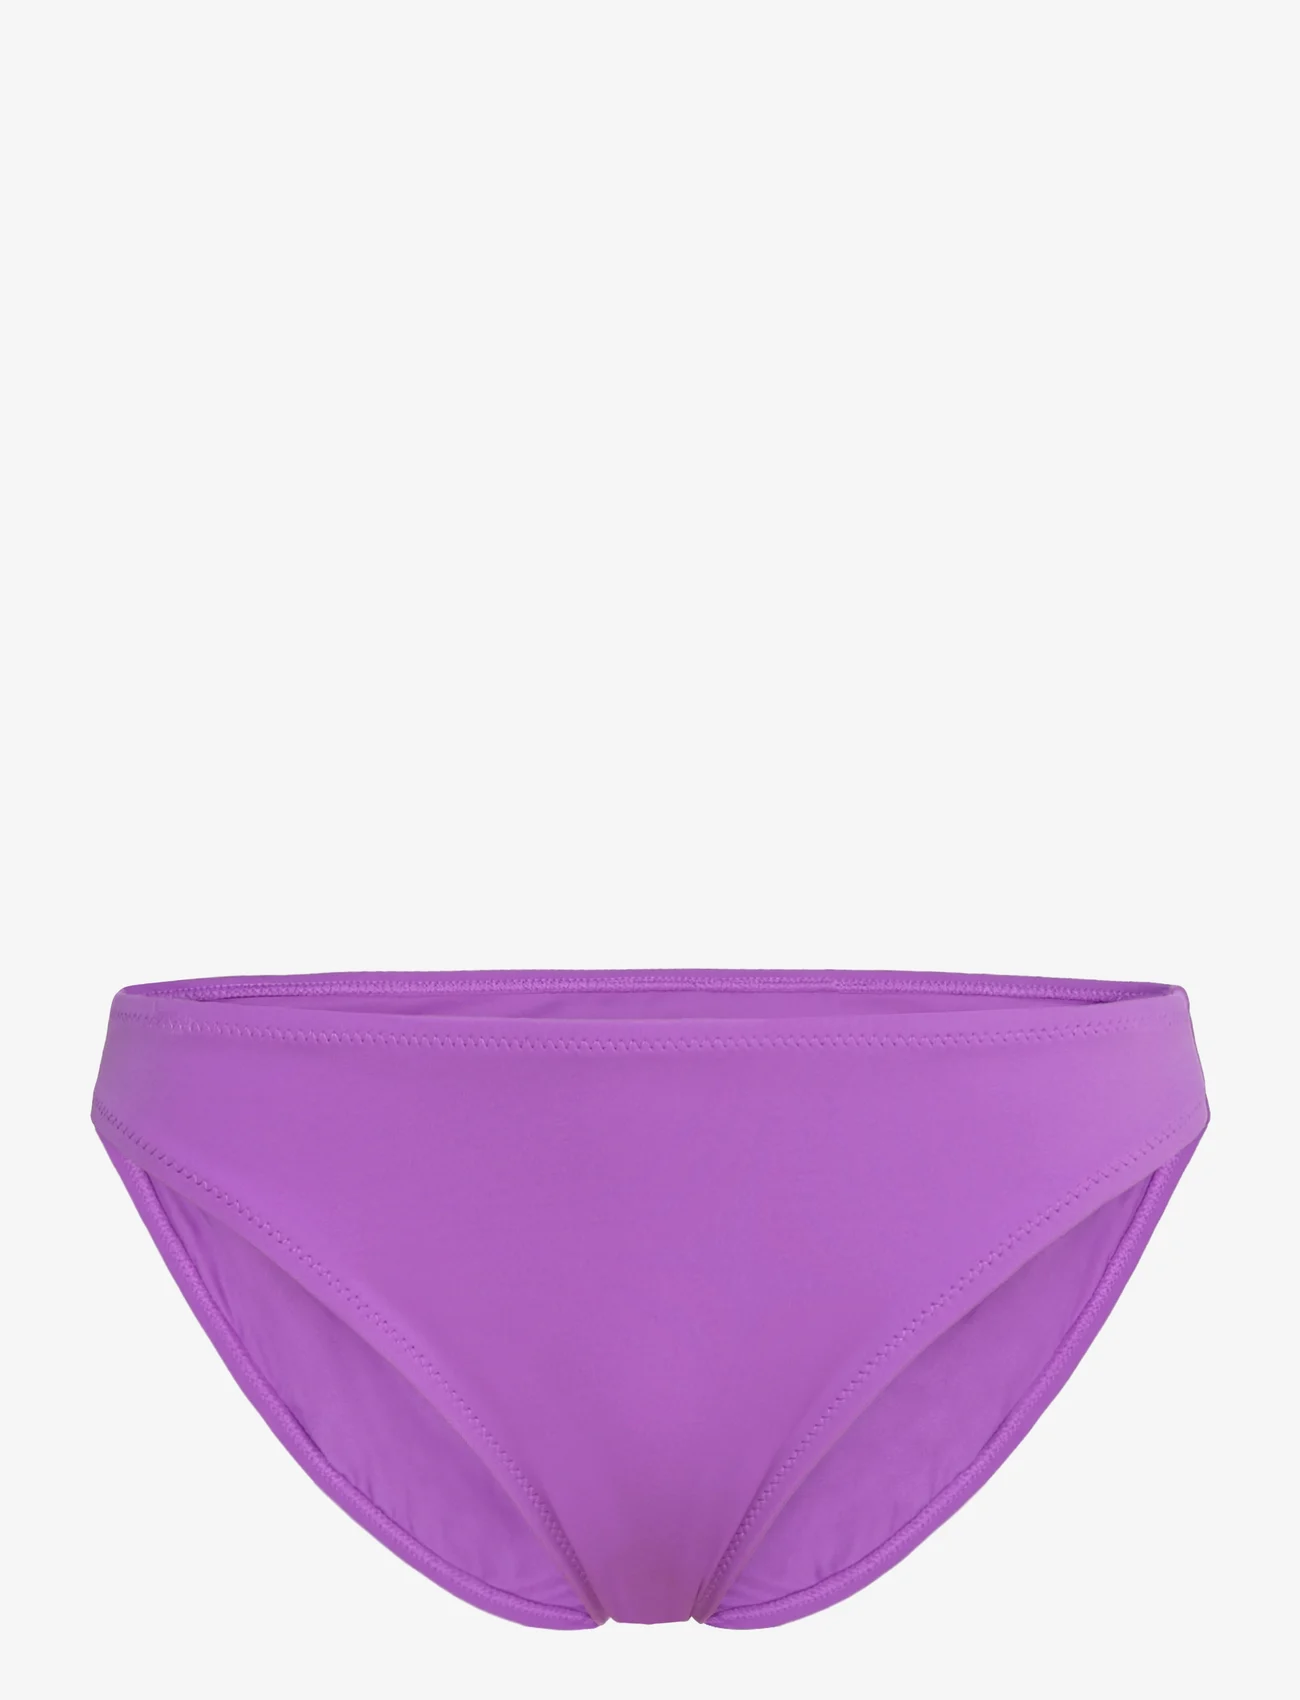 Puma Swim - PUMA SWIM WOMEN CLASSIC BIKINI BOTT - bikinibriefs - purple - 0